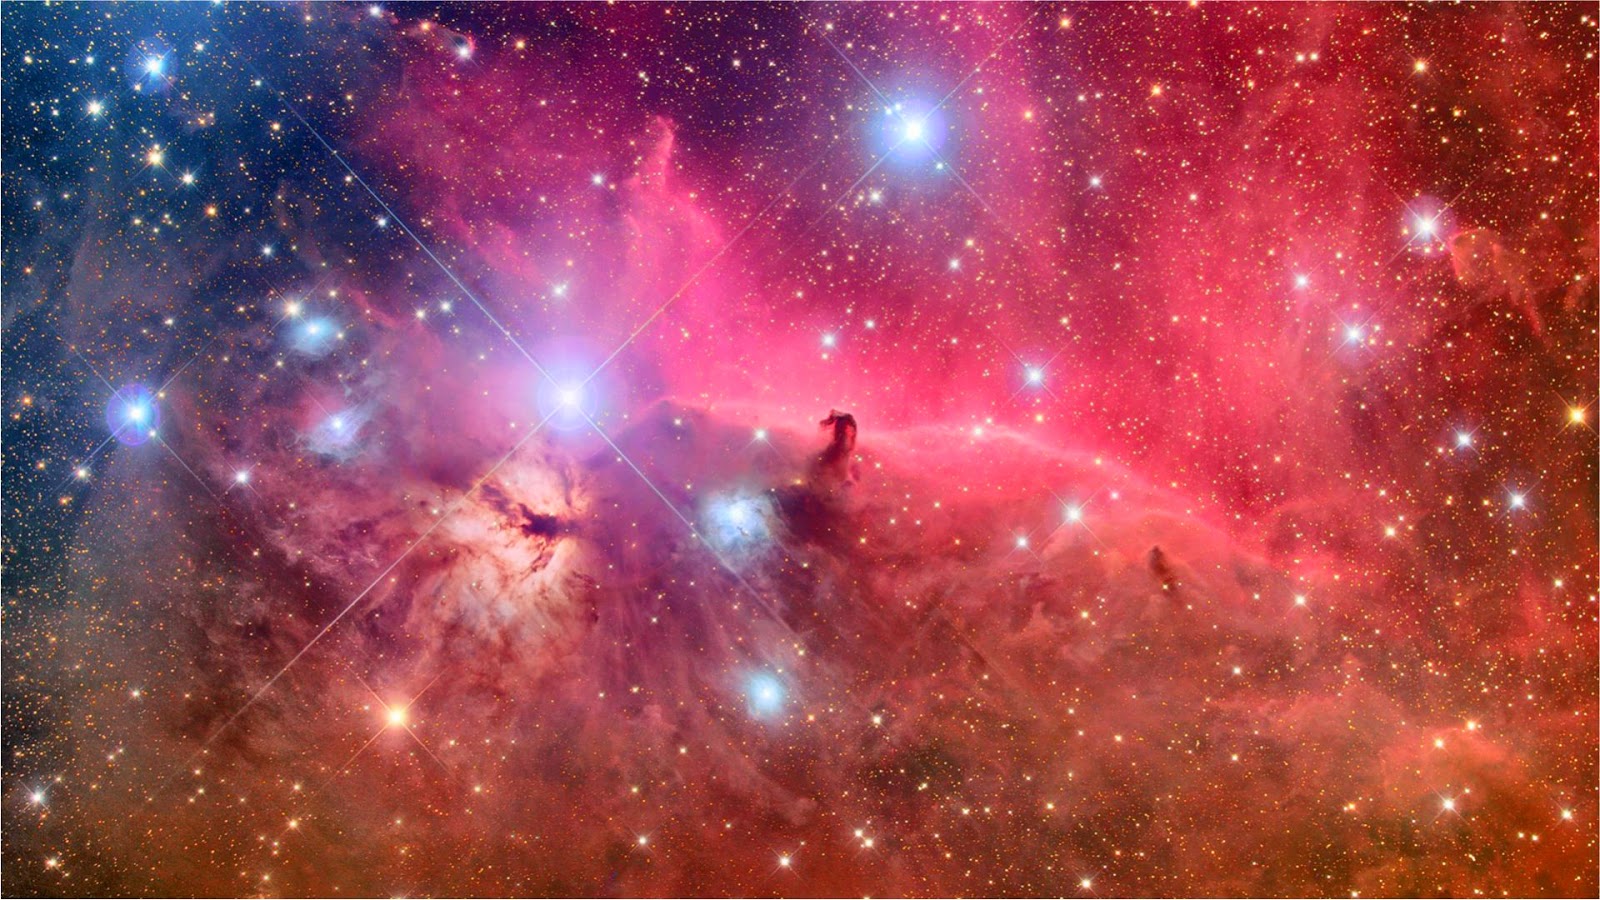 nebula wallpaper 1920x1080,nebula,astronomical object,pink,universe,sky